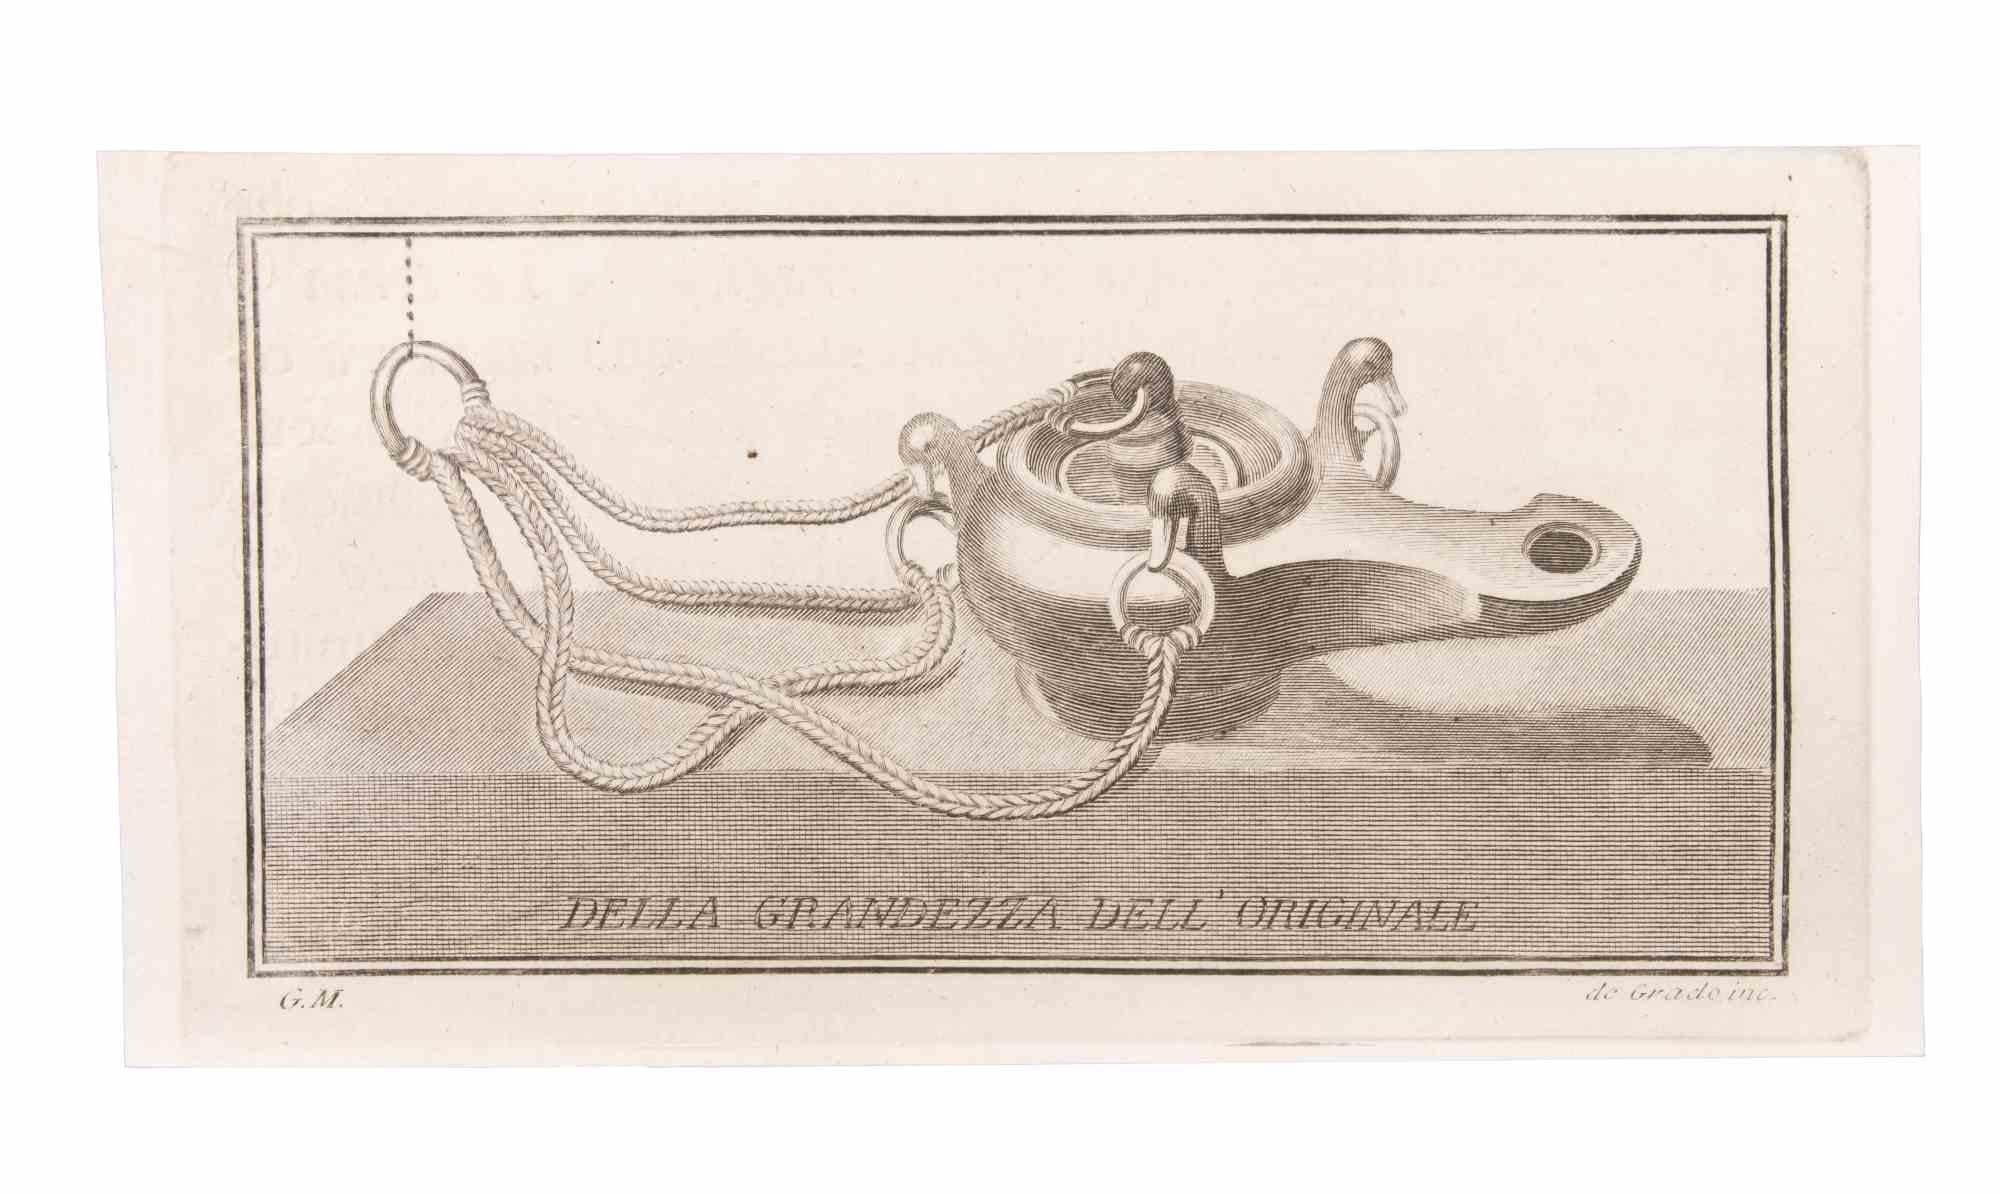 Oil Lamp to Hang - Etching by Filippo de Grado - 18th Century